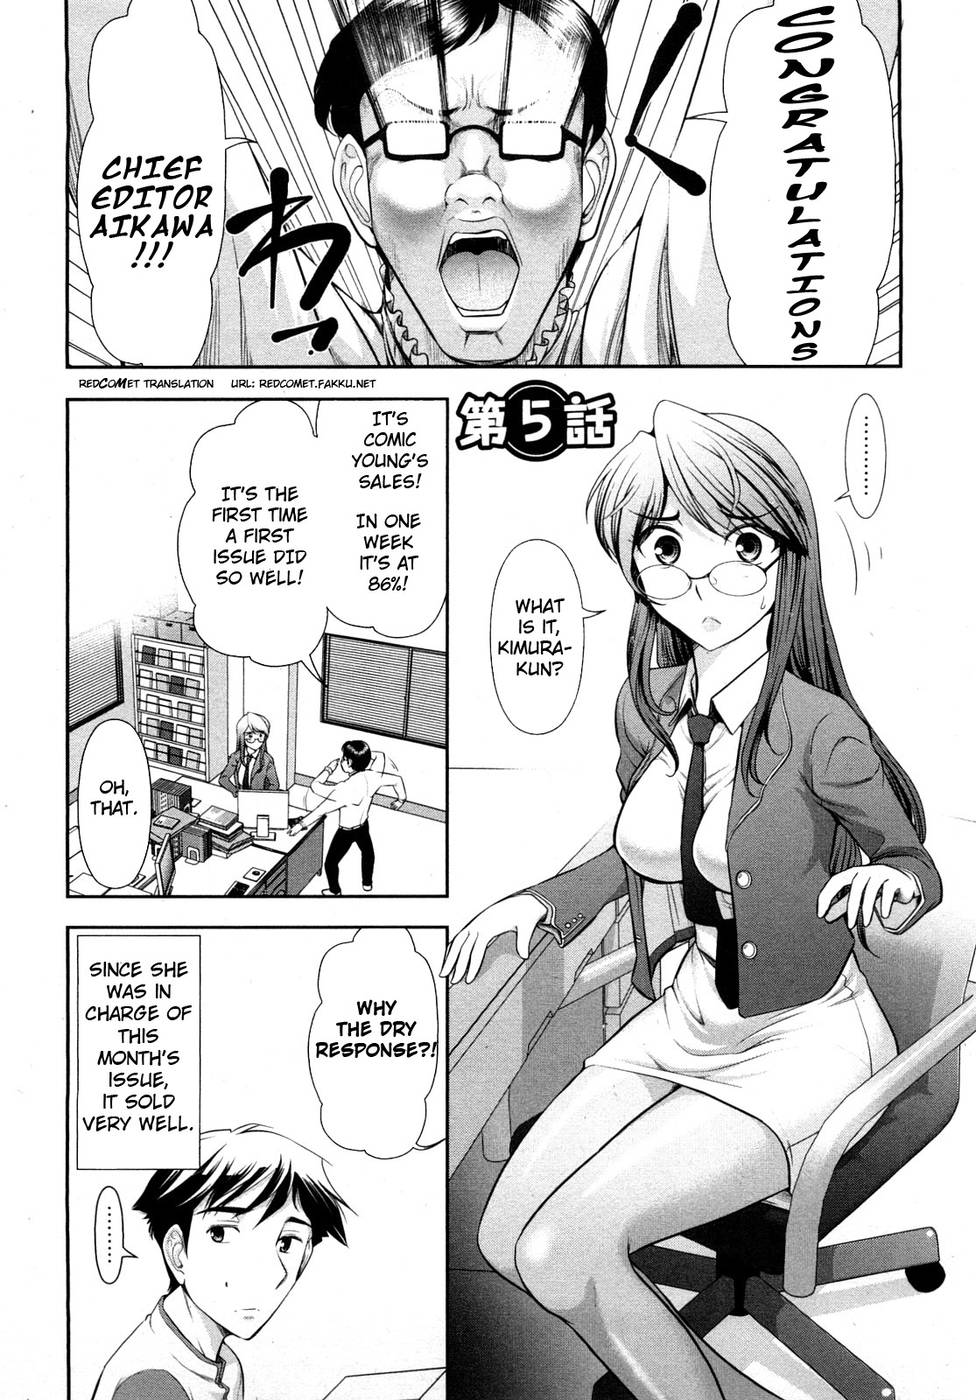 Hentai Manga Comic-Monthly 'Aikawa' The Chief Editor-Chap5-1